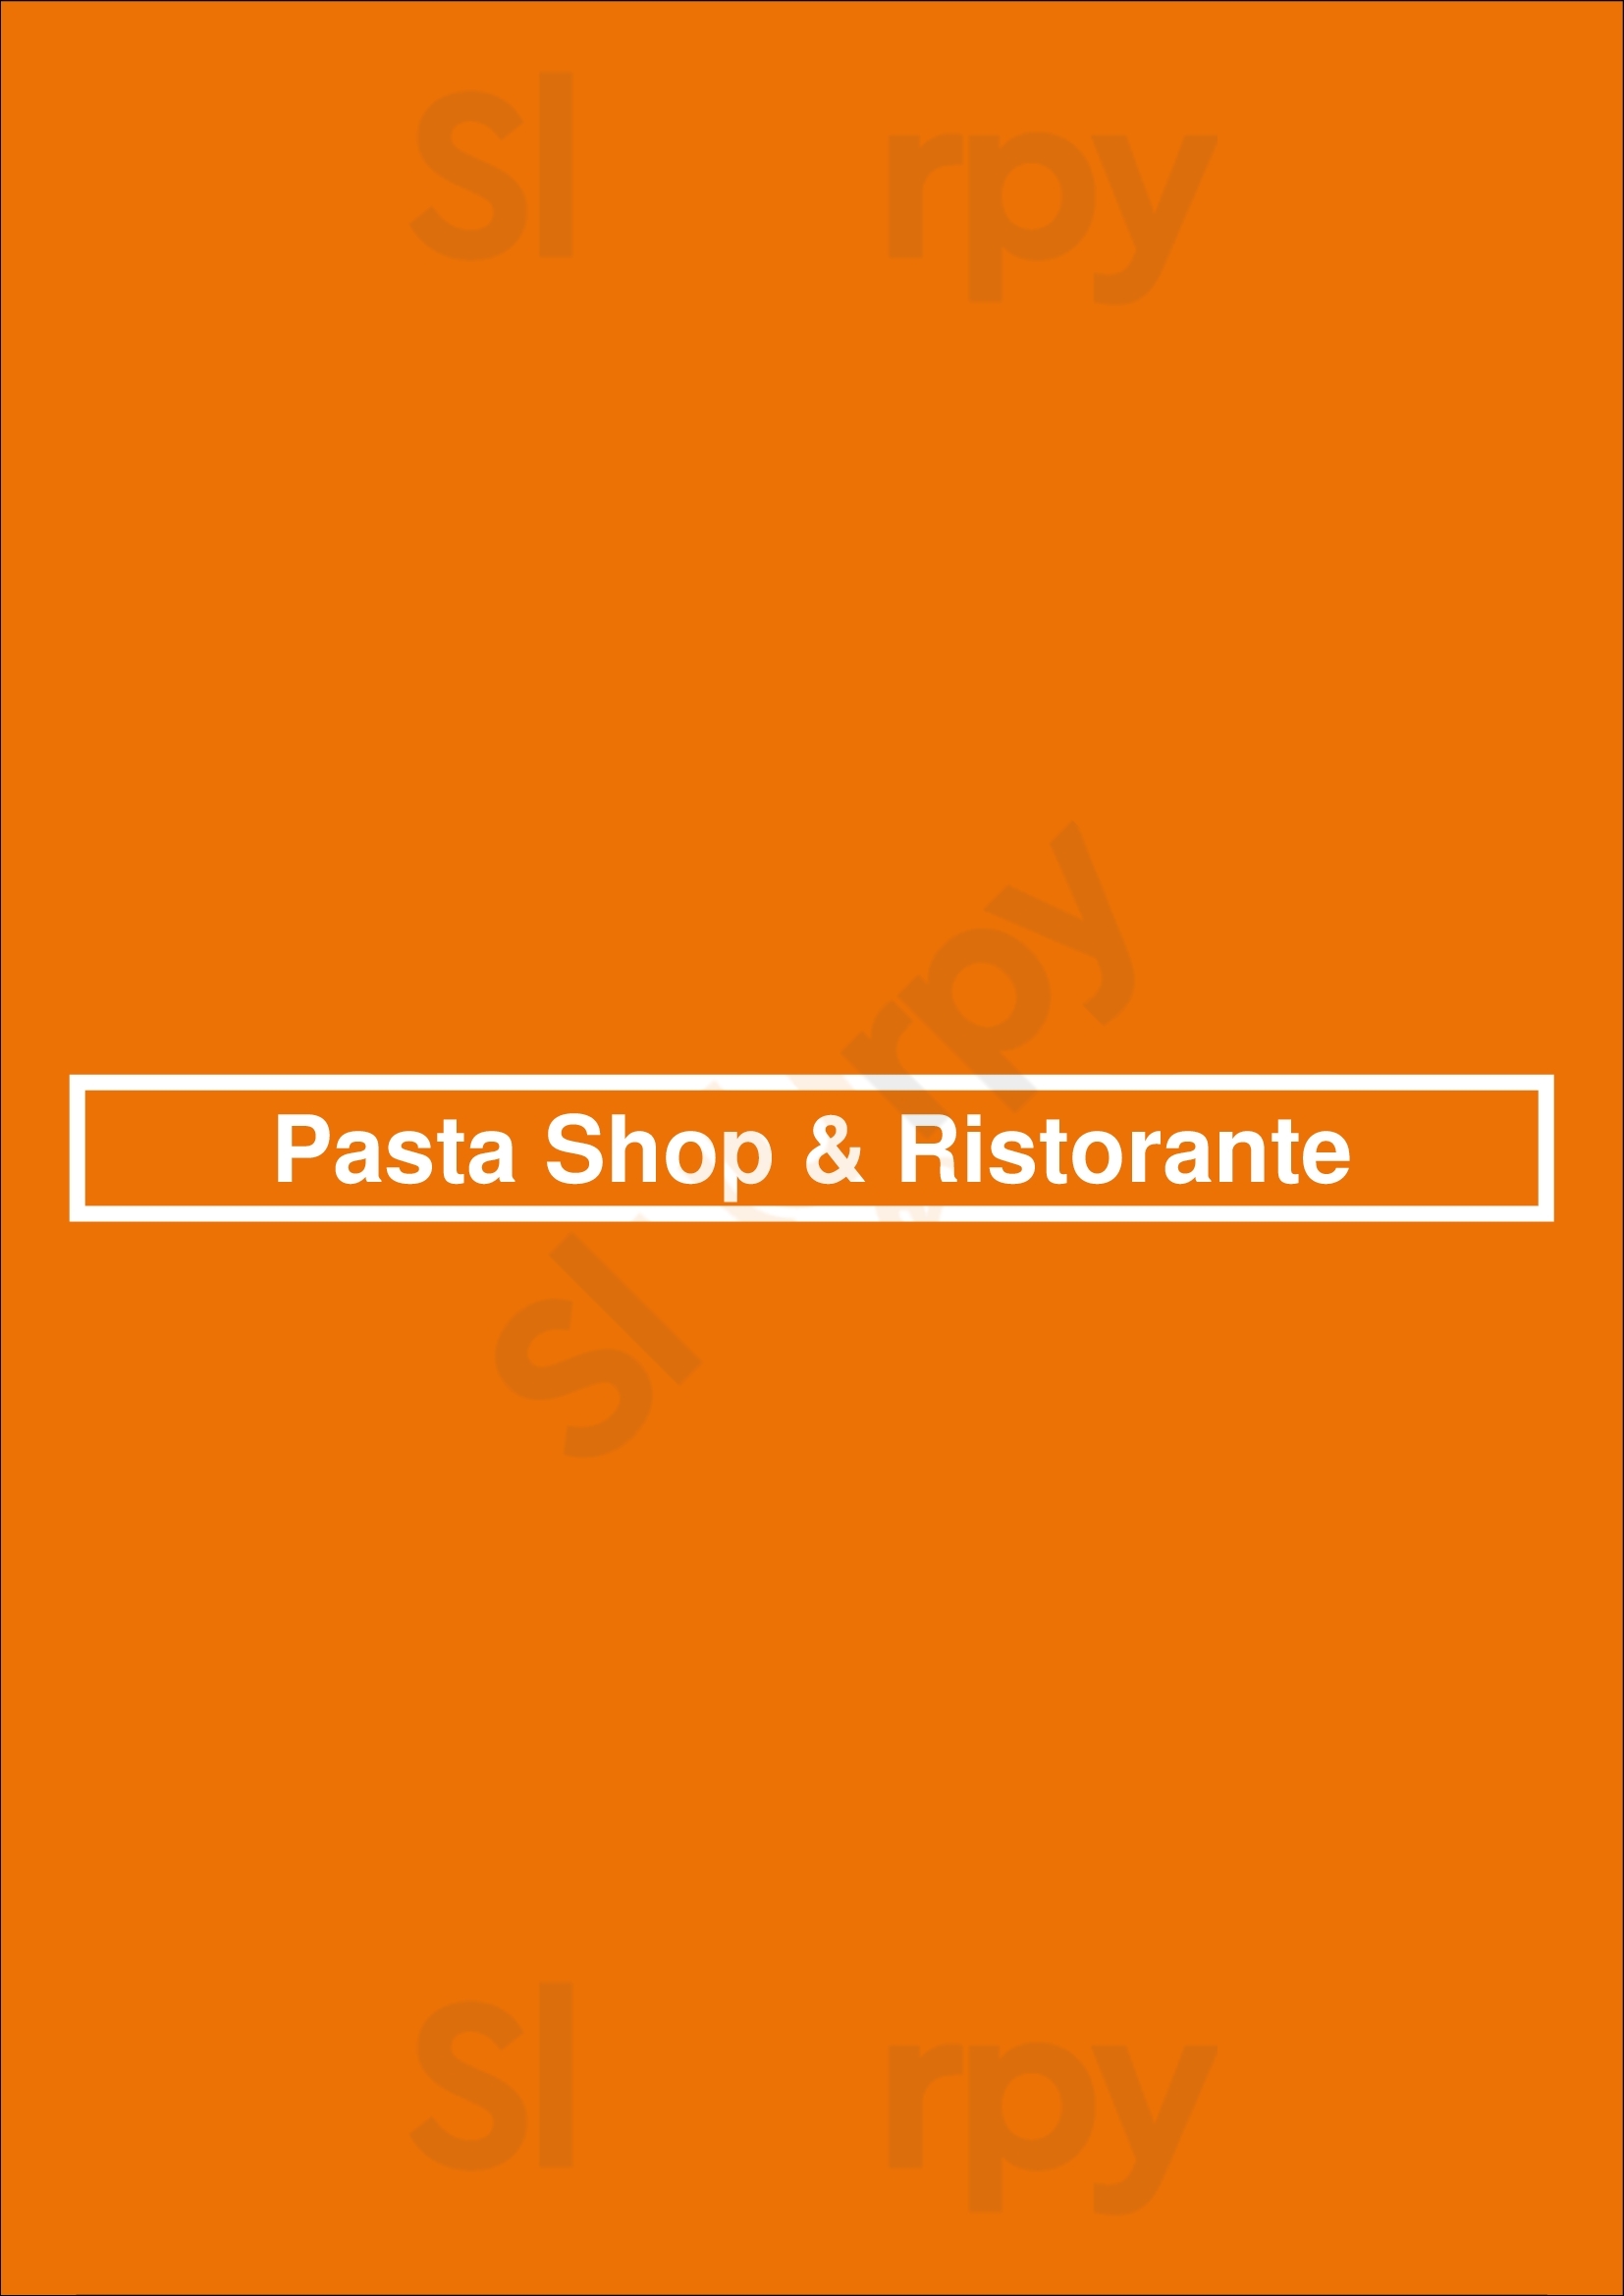 Pasta Shop & Ristorante Henderson Menu - 1